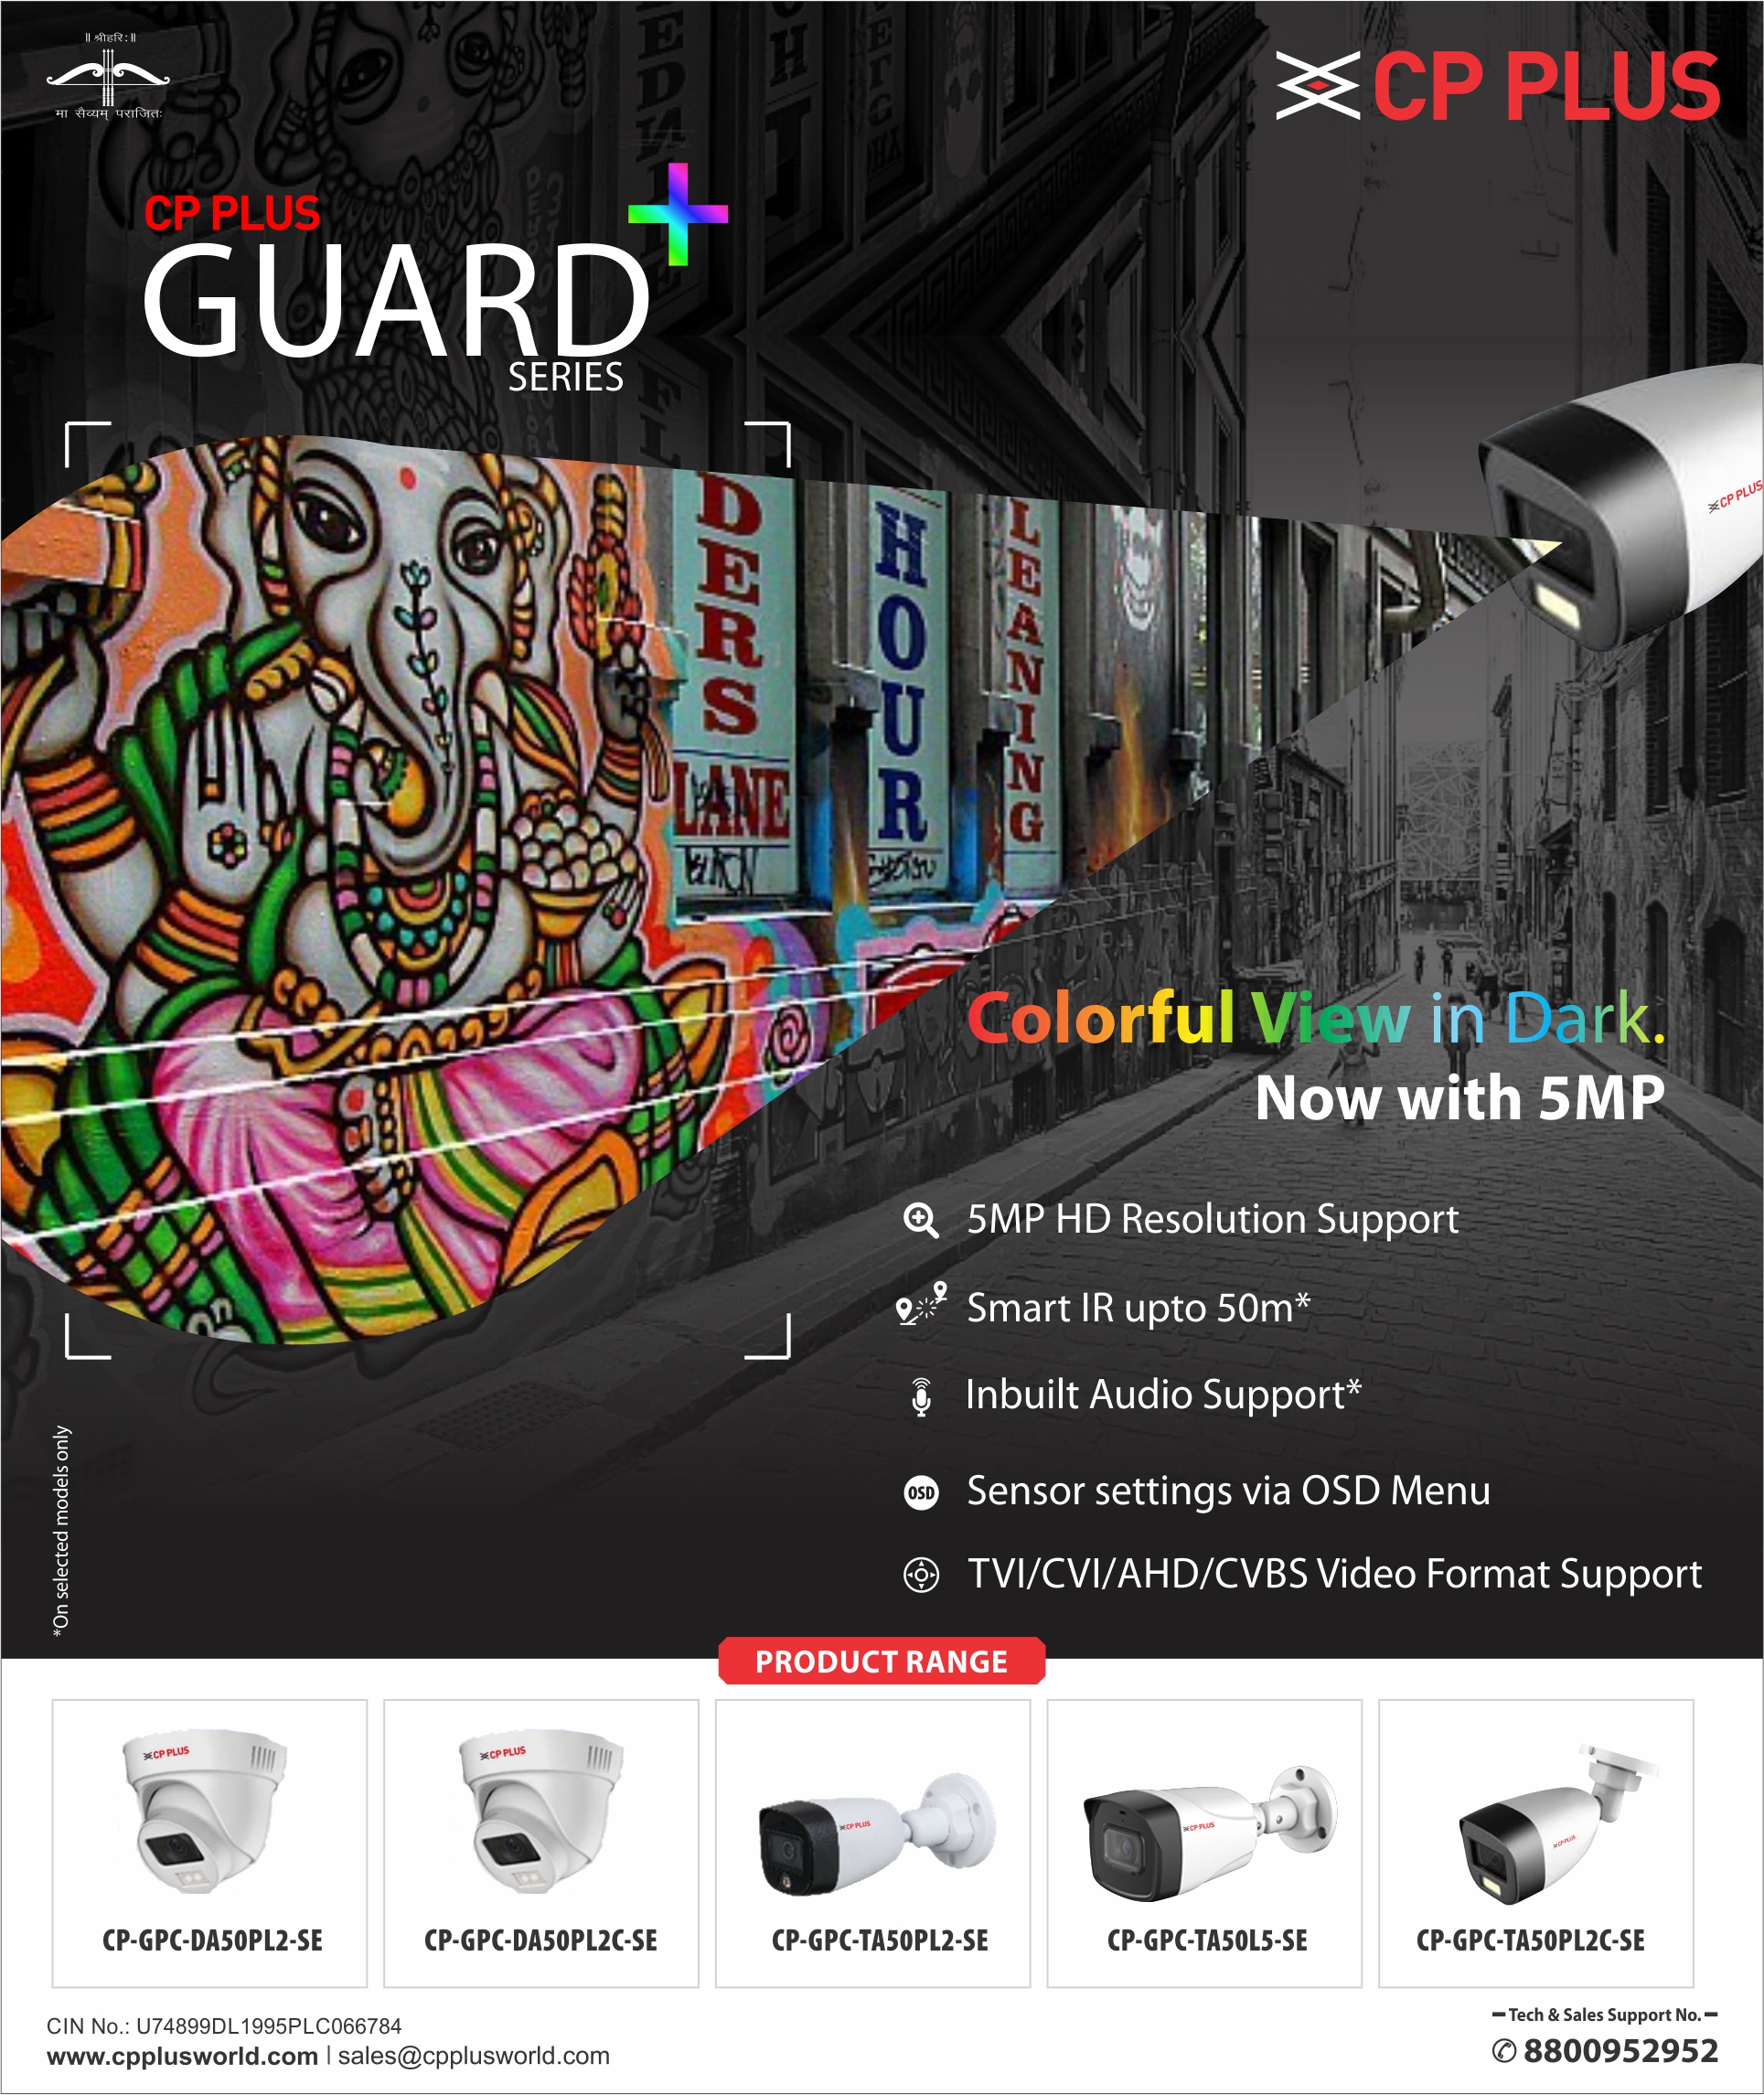 Guard + Colorful View in Dark